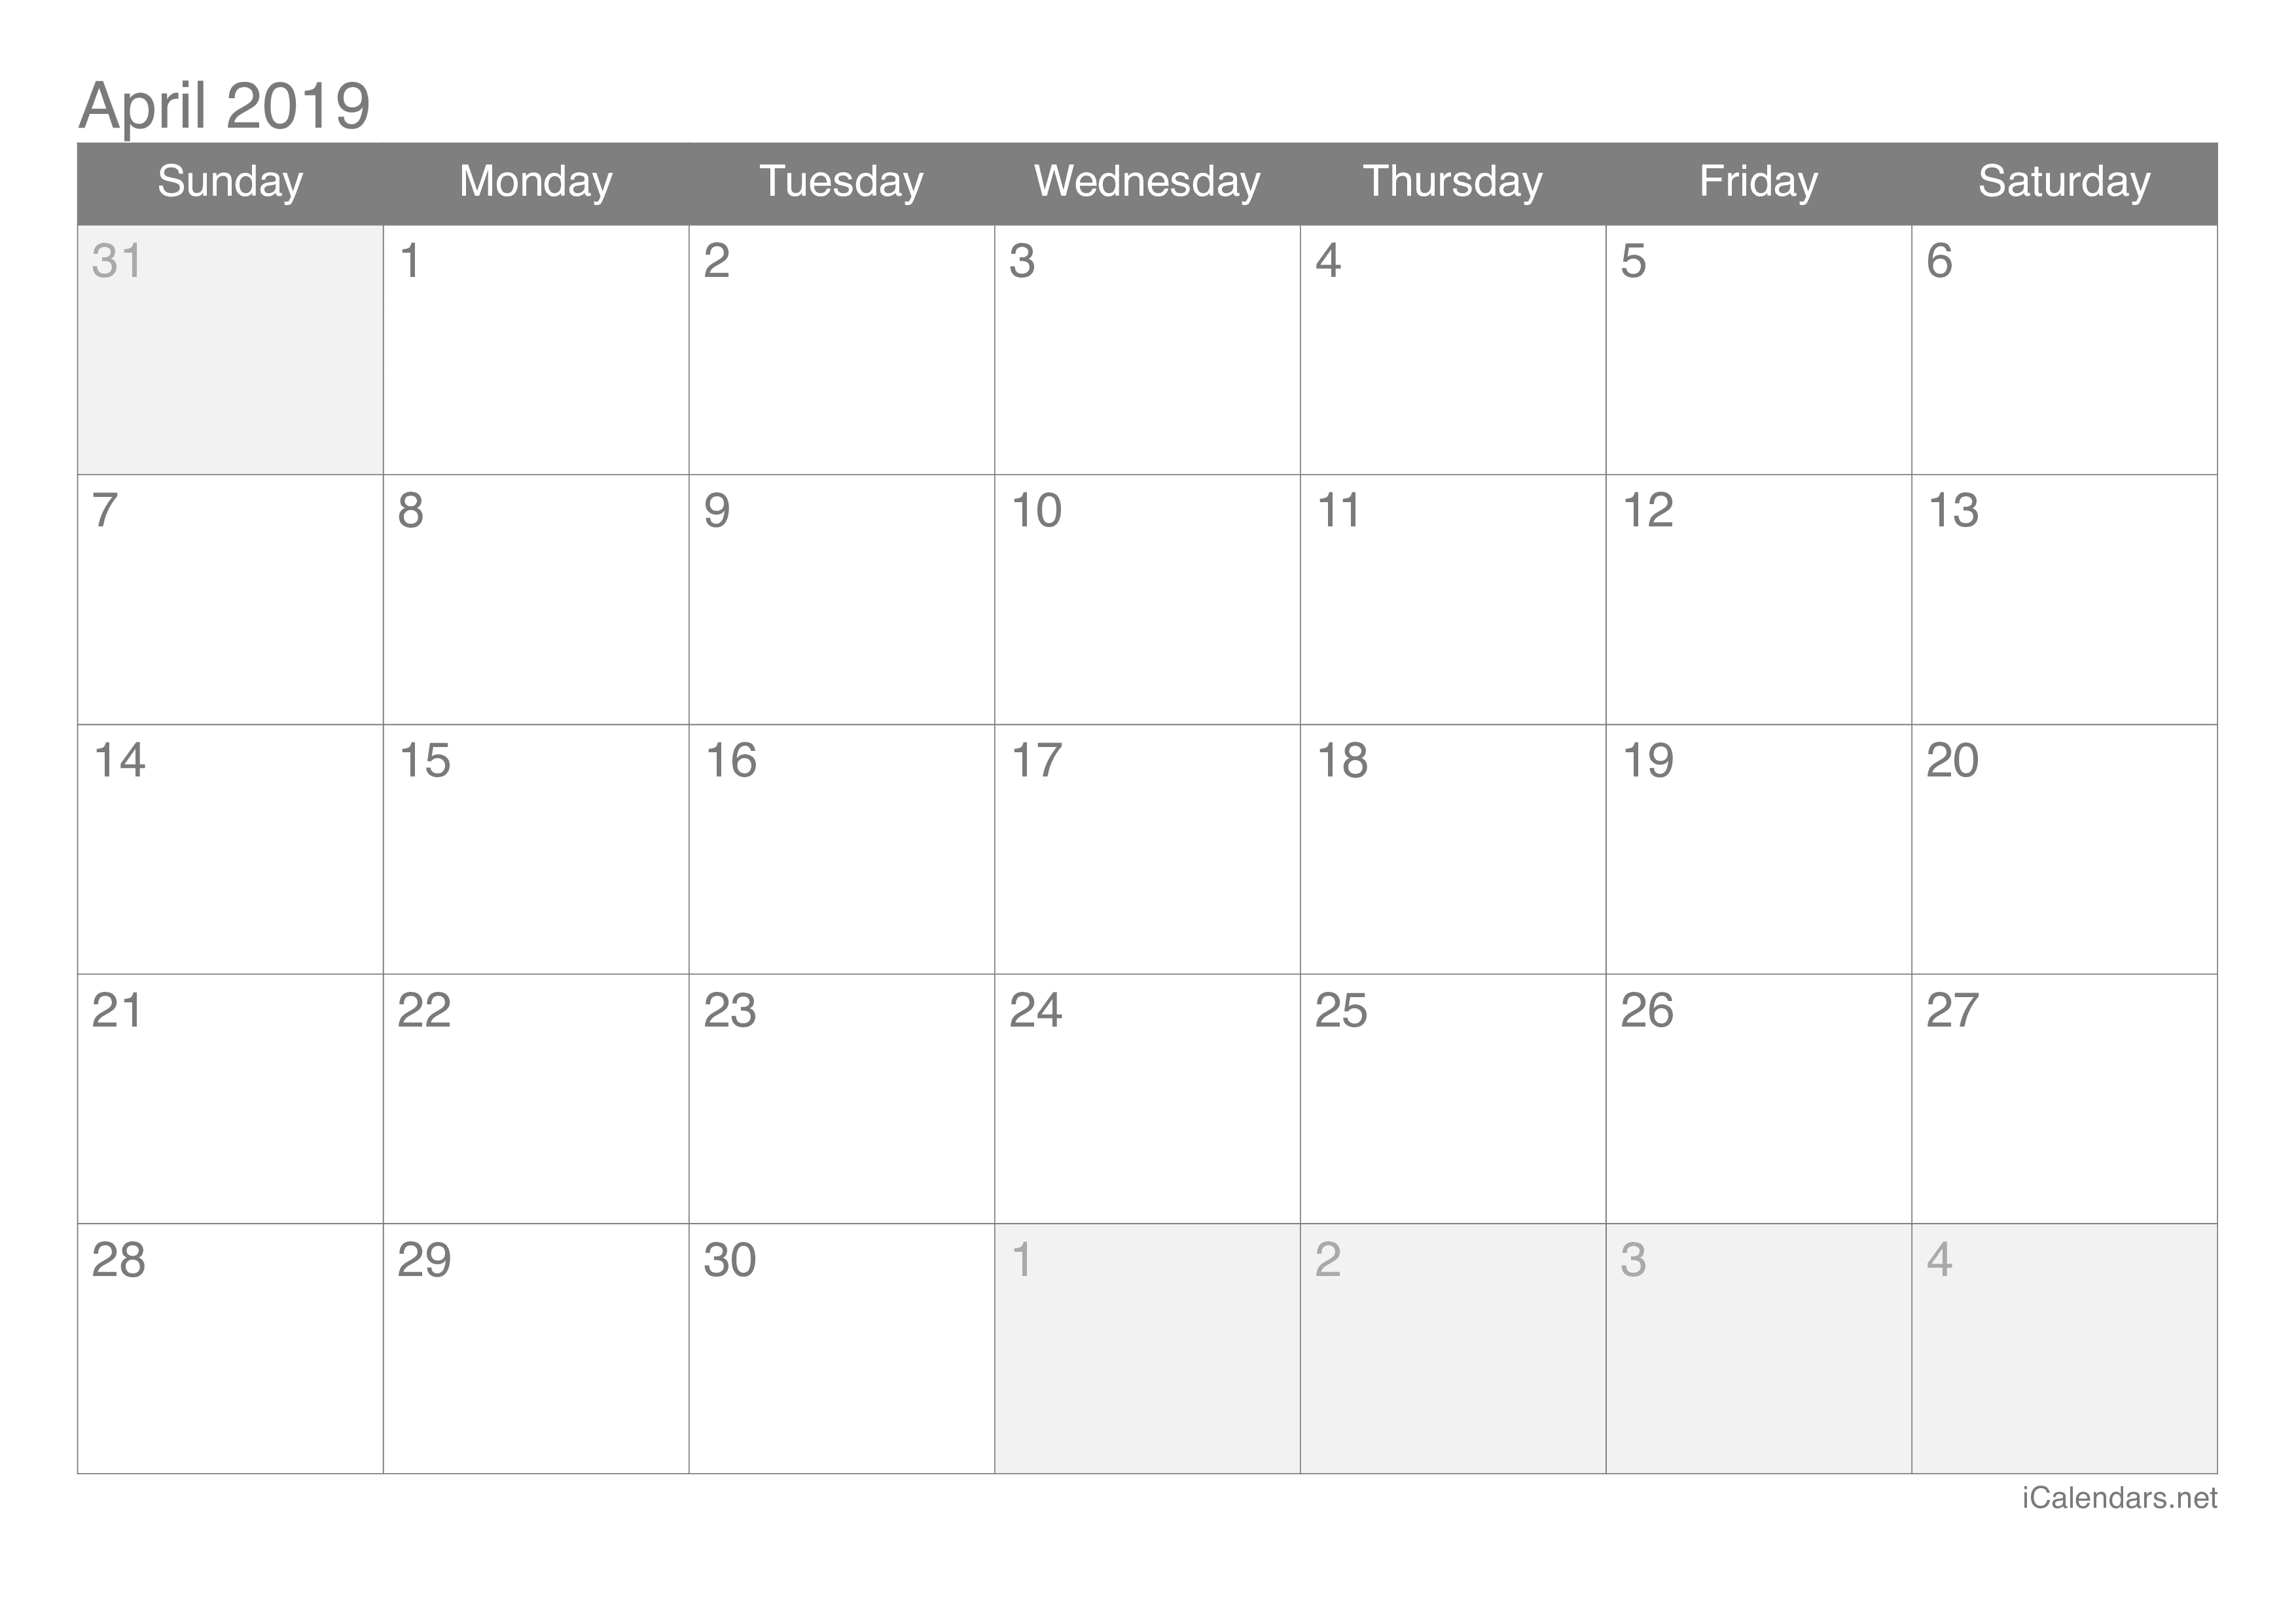 2019 April Calendar